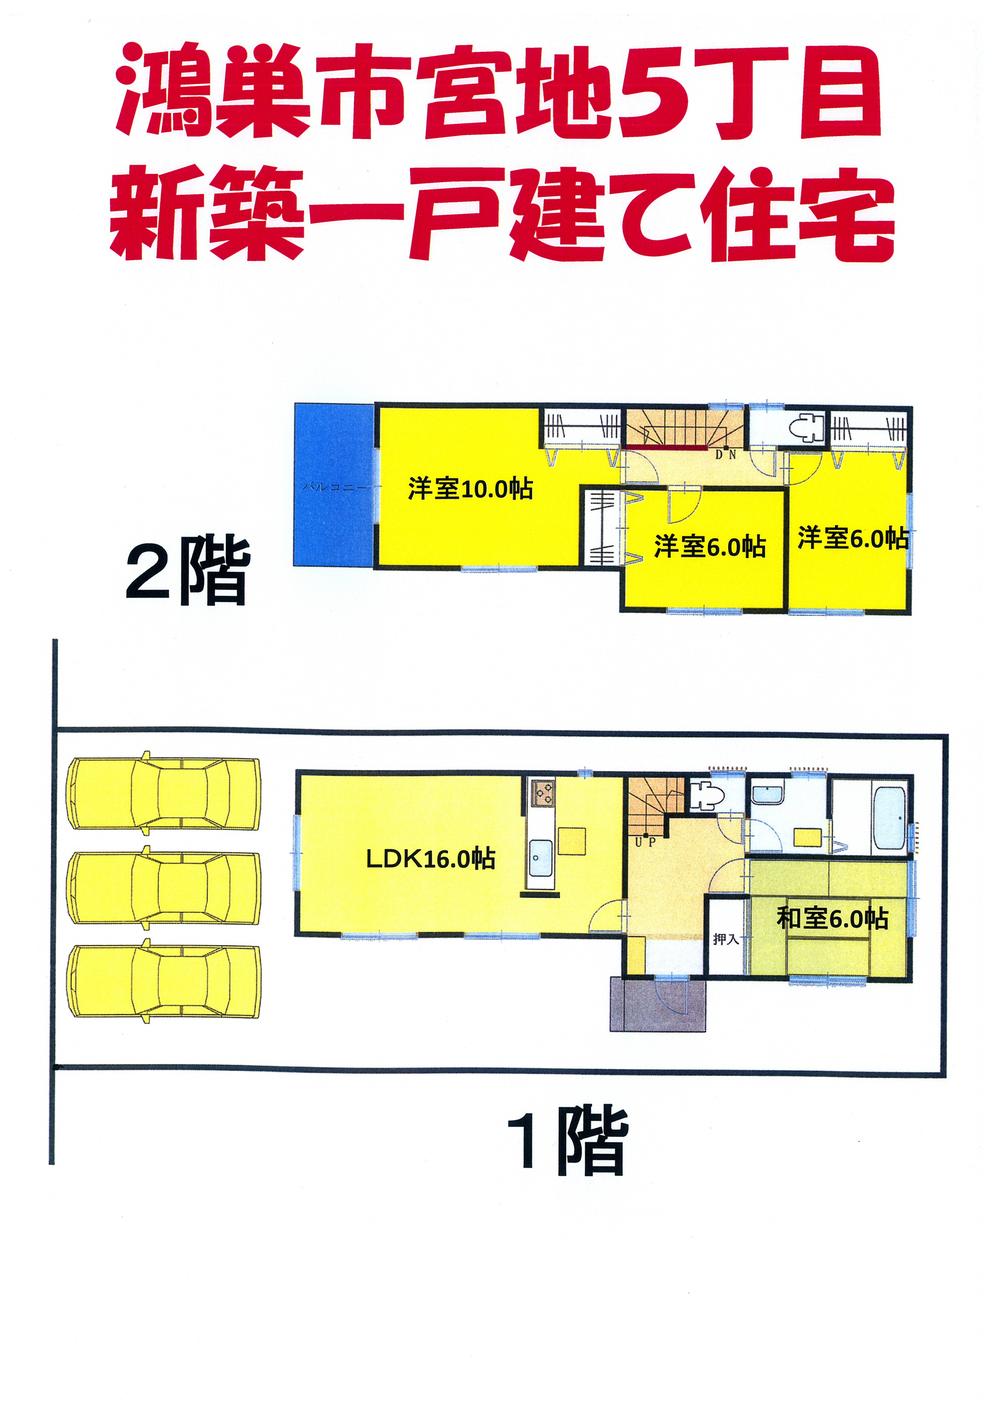 Floor plan. 21,800,000 yen, 4LDK, Land area 149.54 sq m , Building area 104.33 sq m